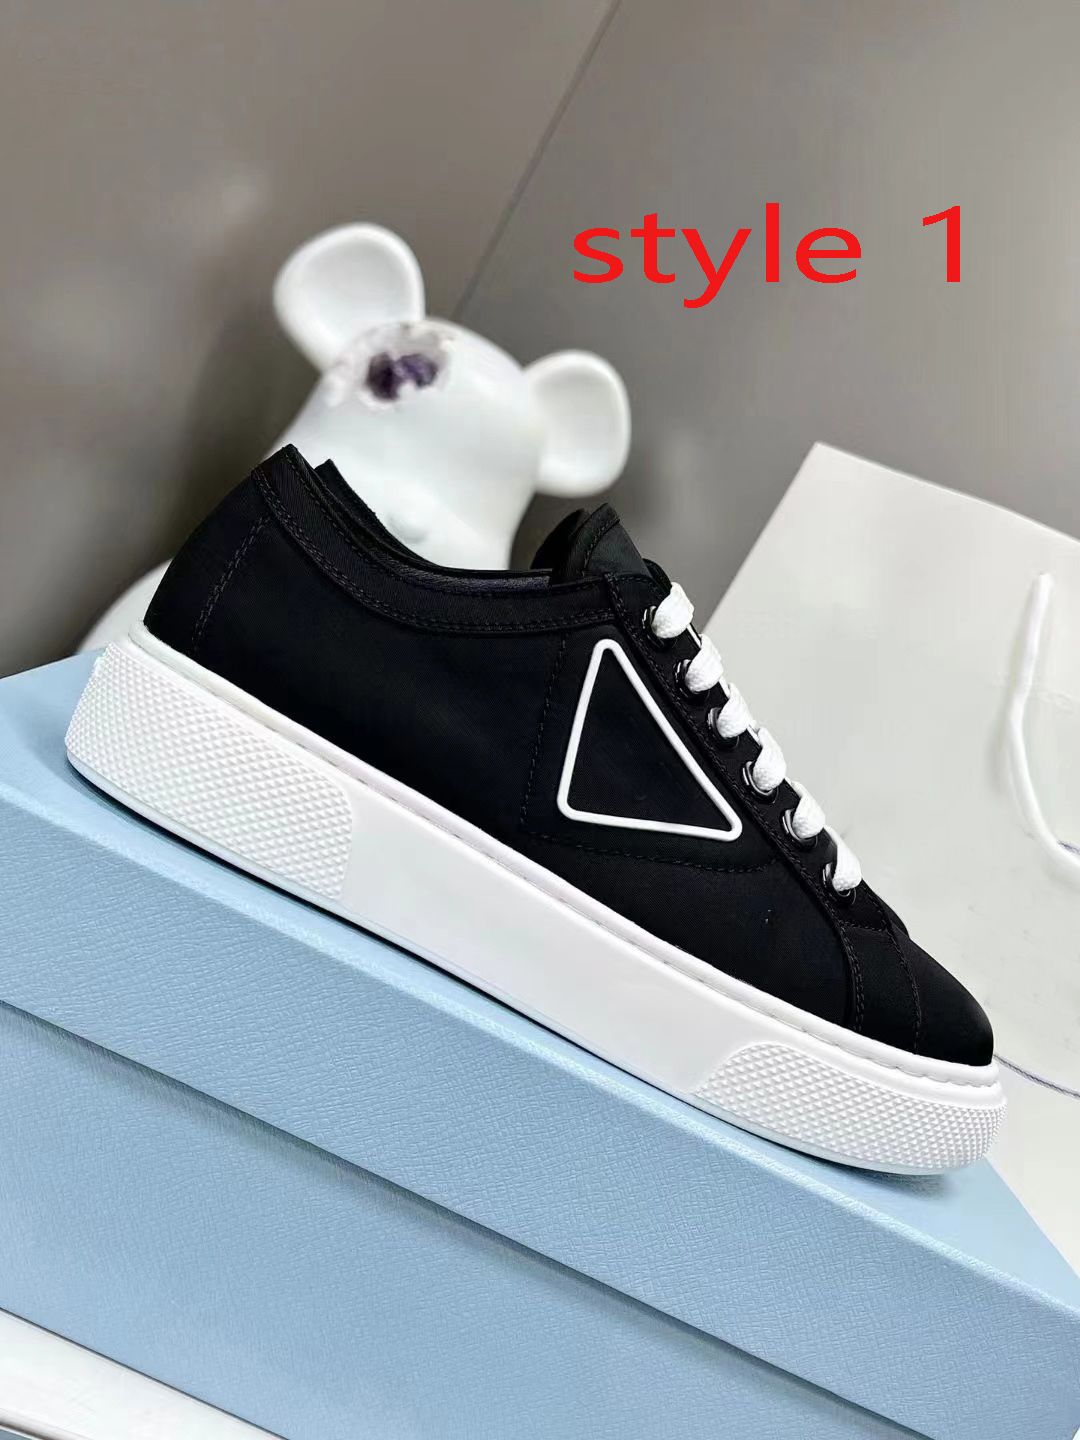 style 1 Black